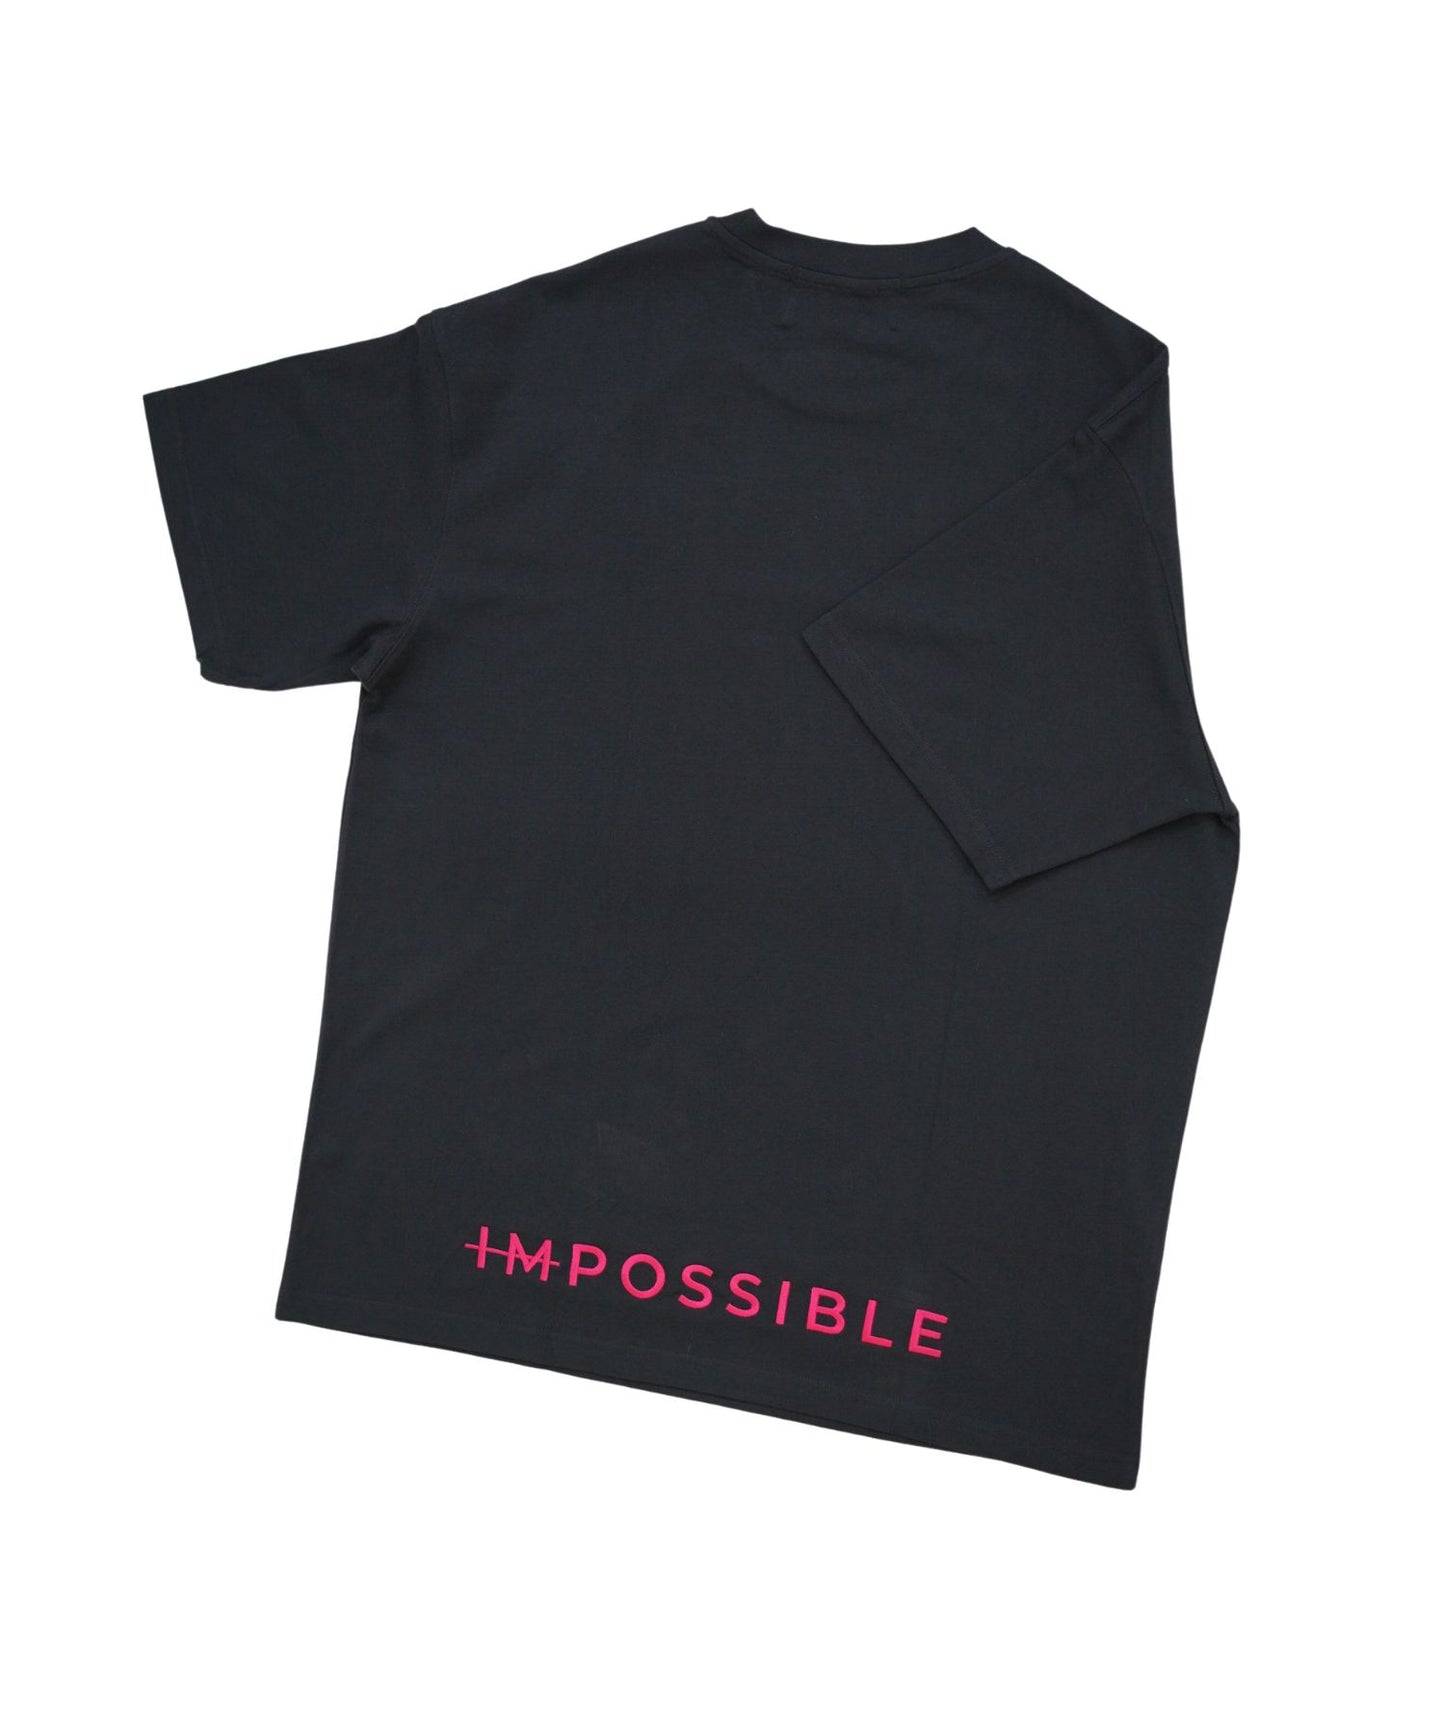 Artchimia Imposible t shirt